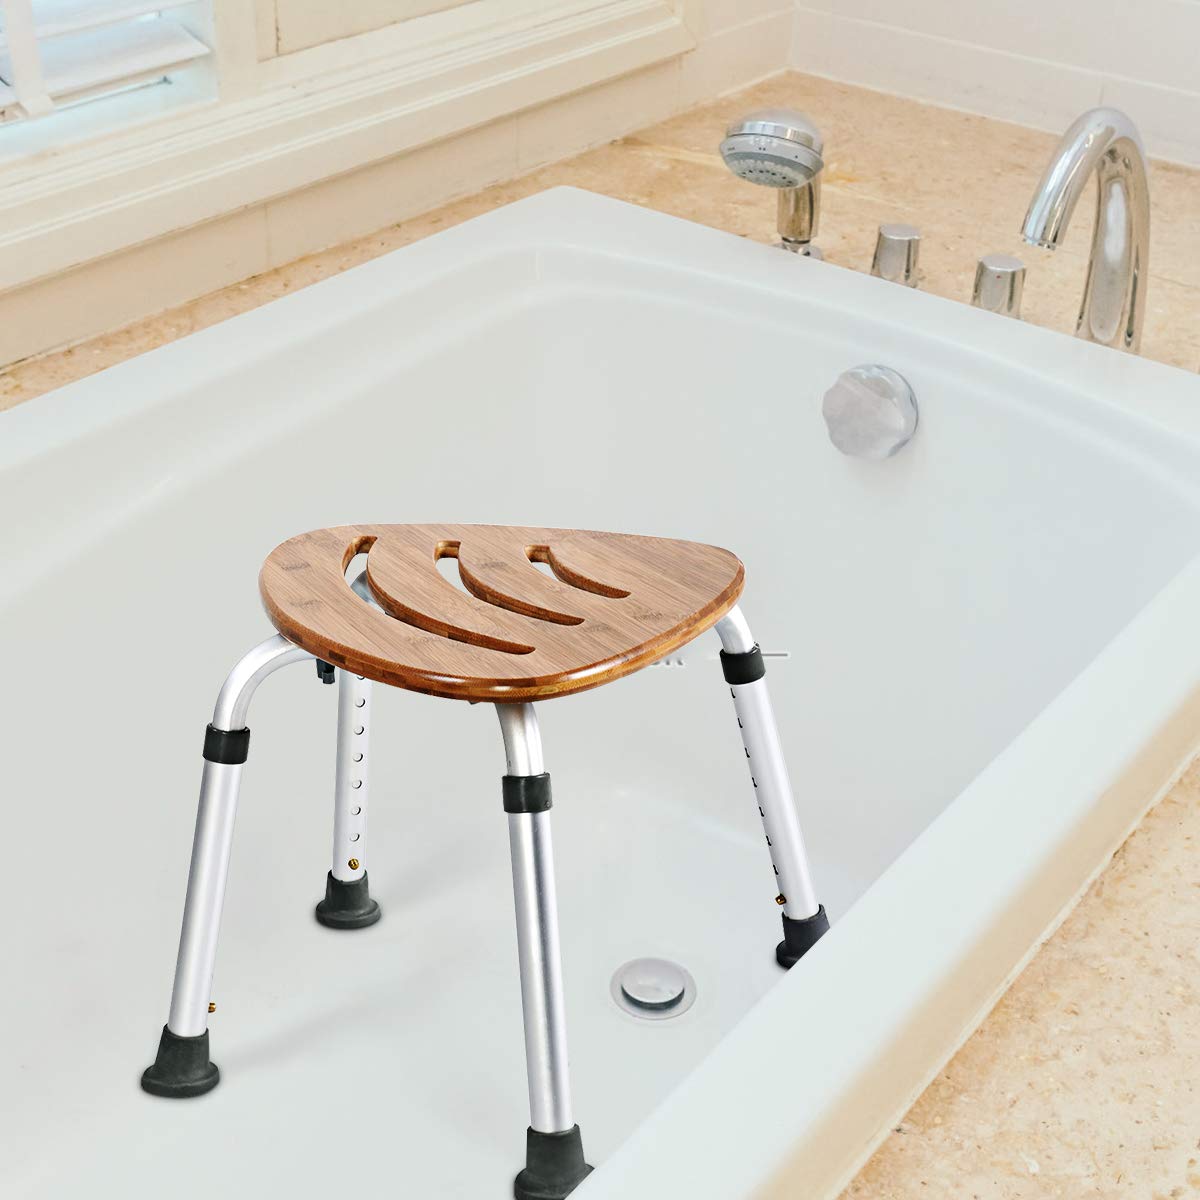 Waterproof Tool-Free Assembly Shower Stool Bamboo Bath Seat